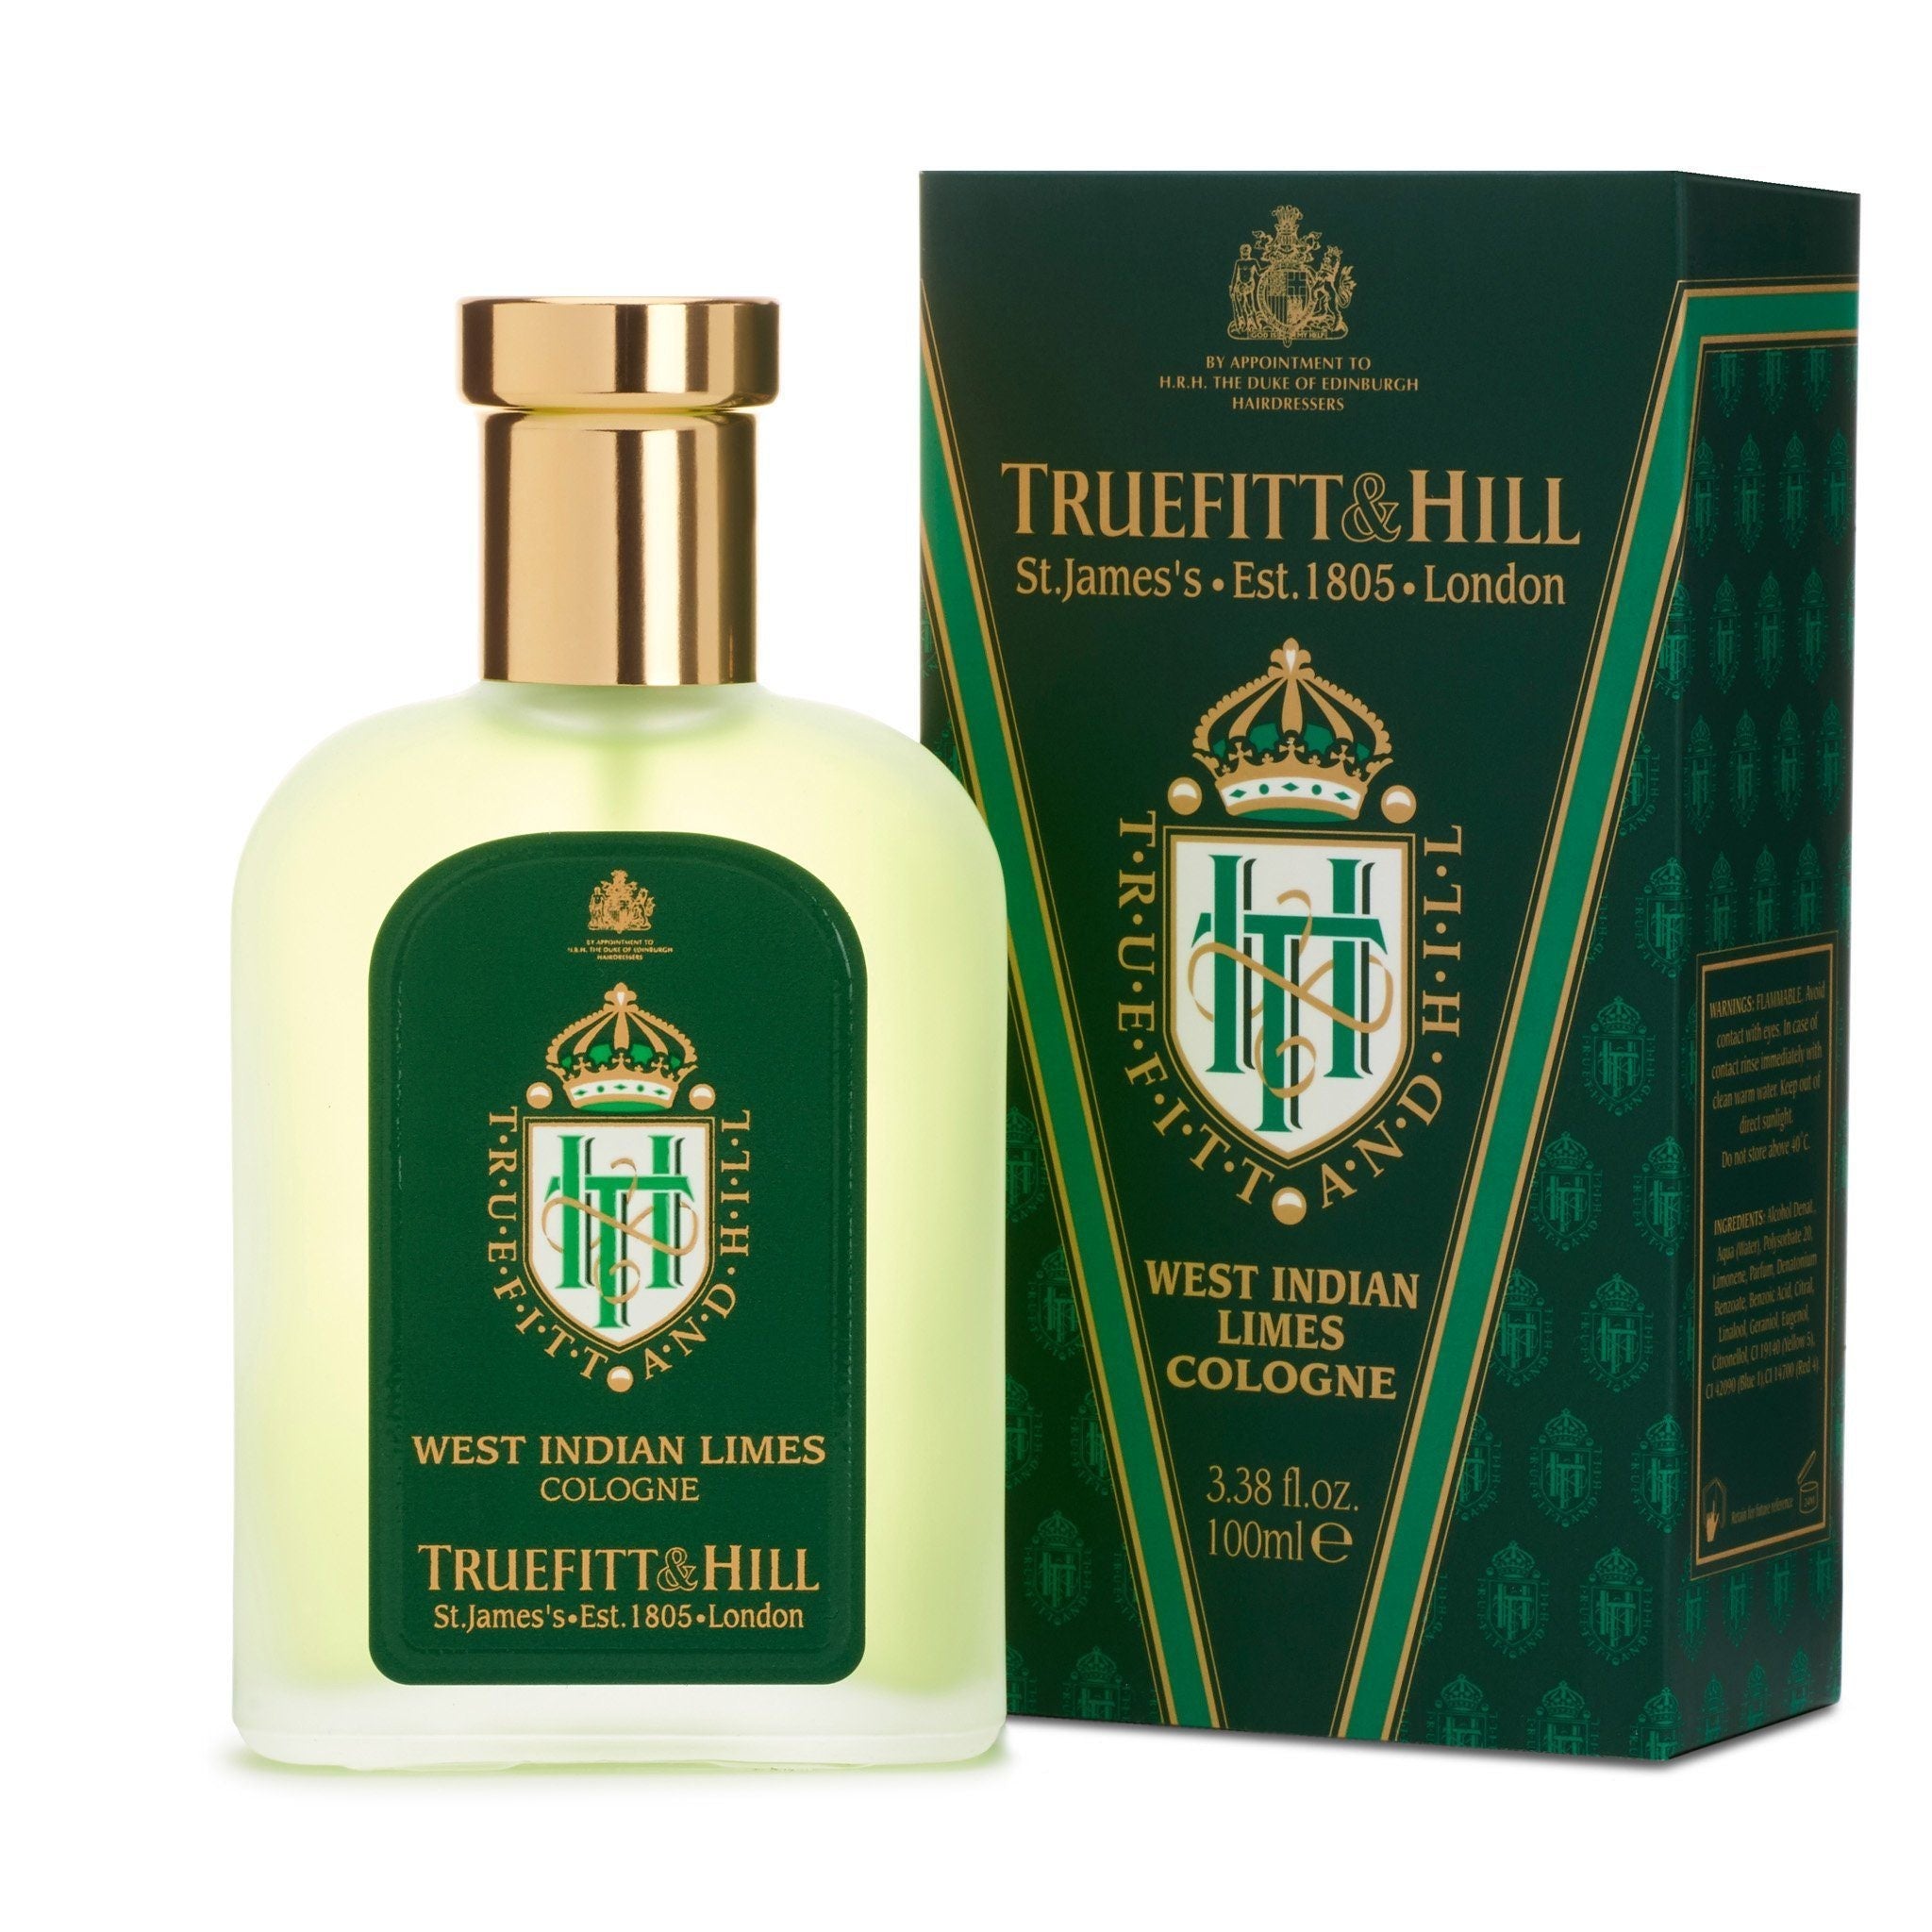 Truefitt & Hill Cologne - West Indian Limes